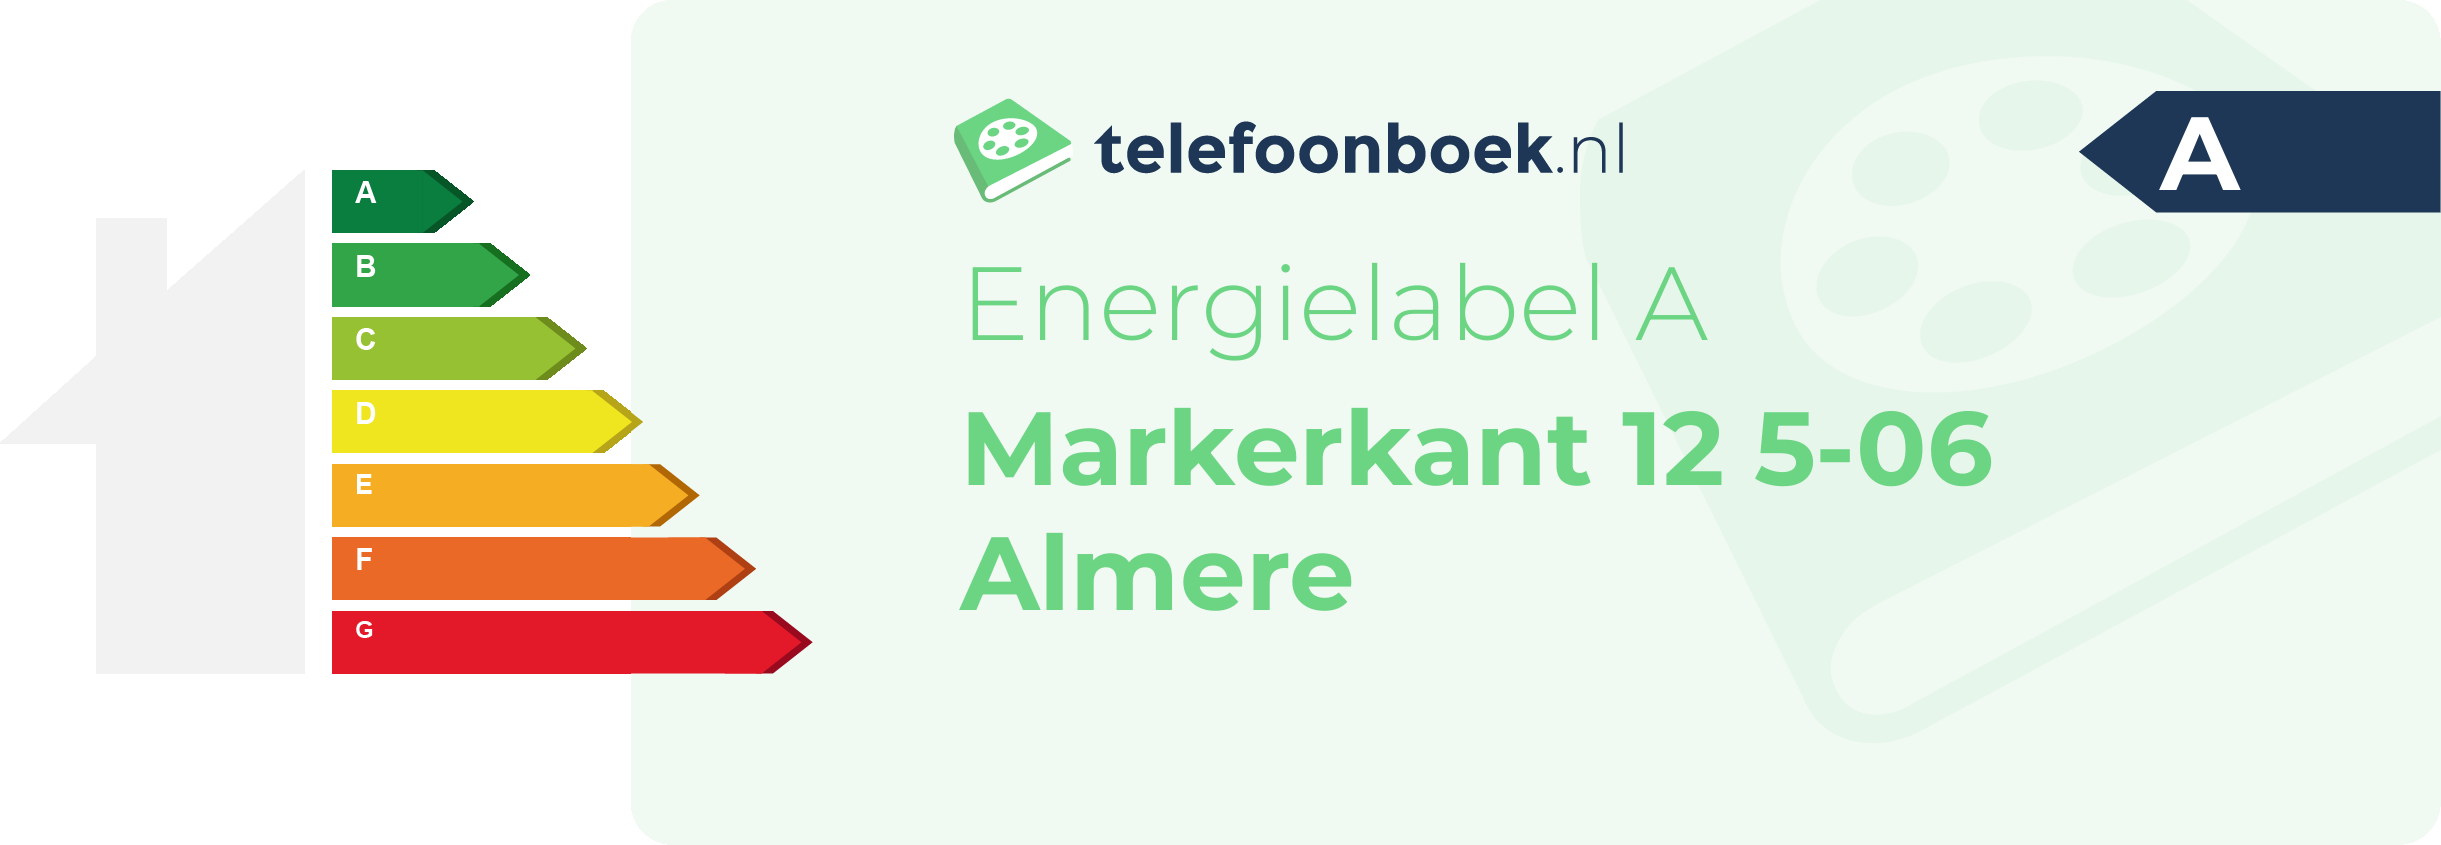 Energielabel Markerkant 12 5-06 Almere